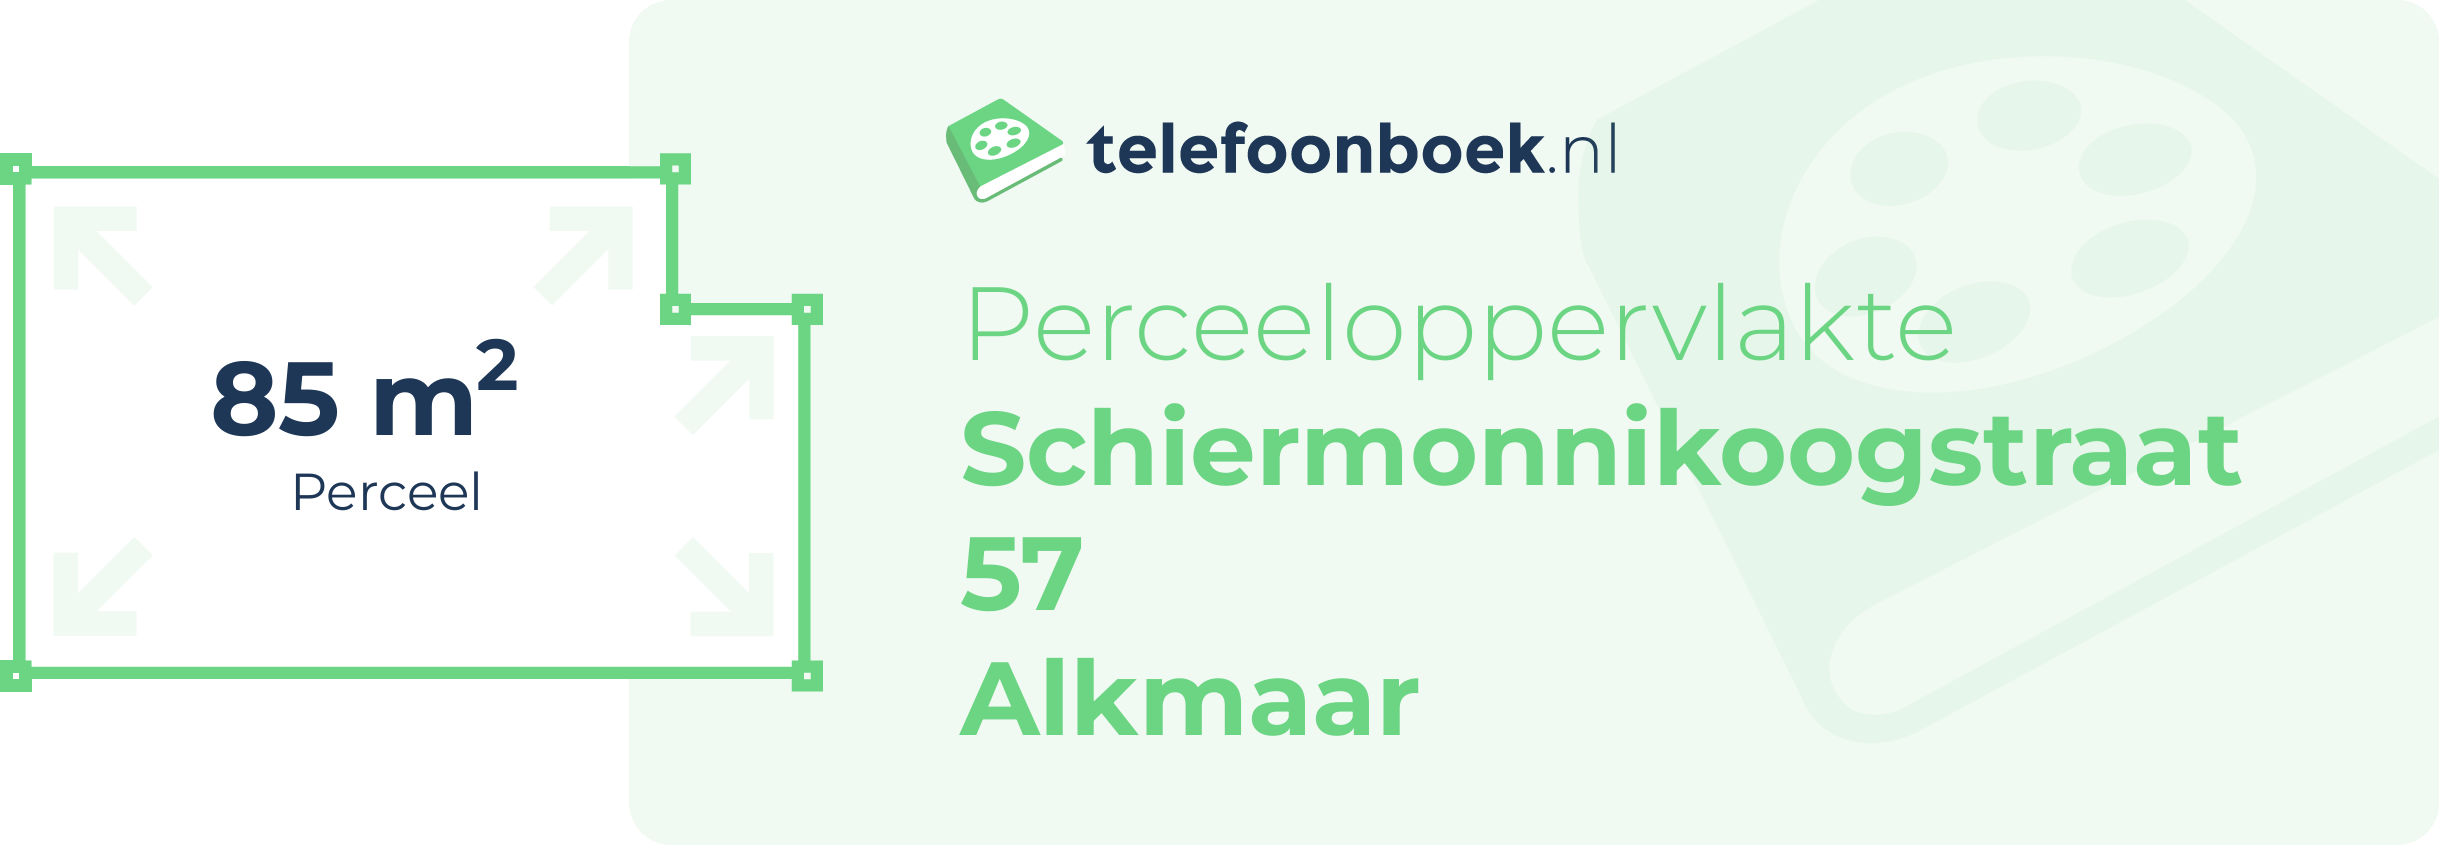 Perceeloppervlakte Schiermonnikoogstraat 57 Alkmaar